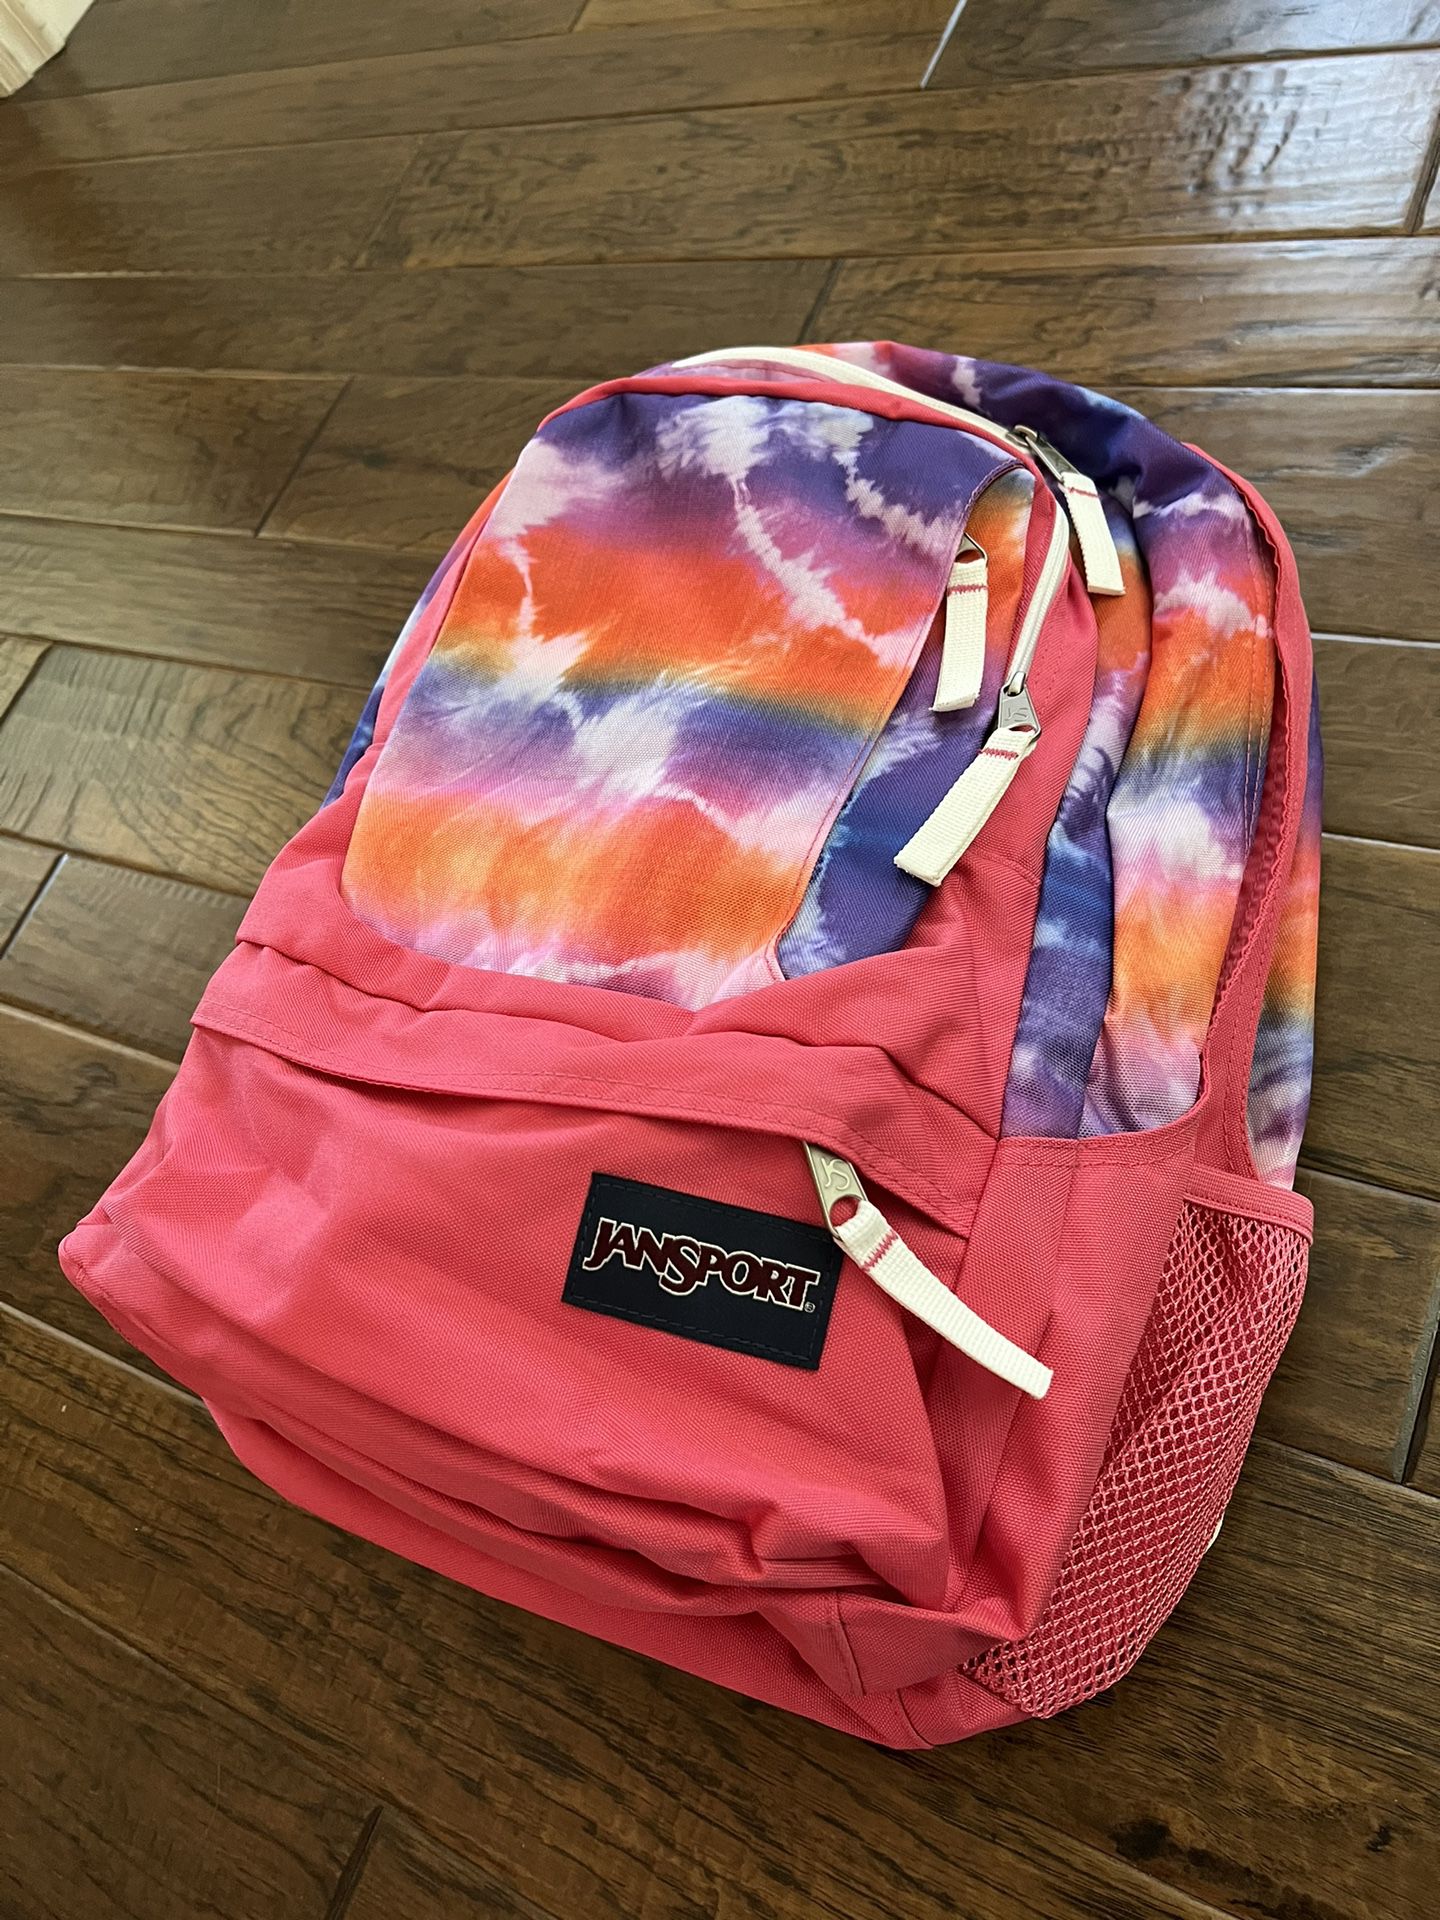 Brand New Jansport Backpack! 